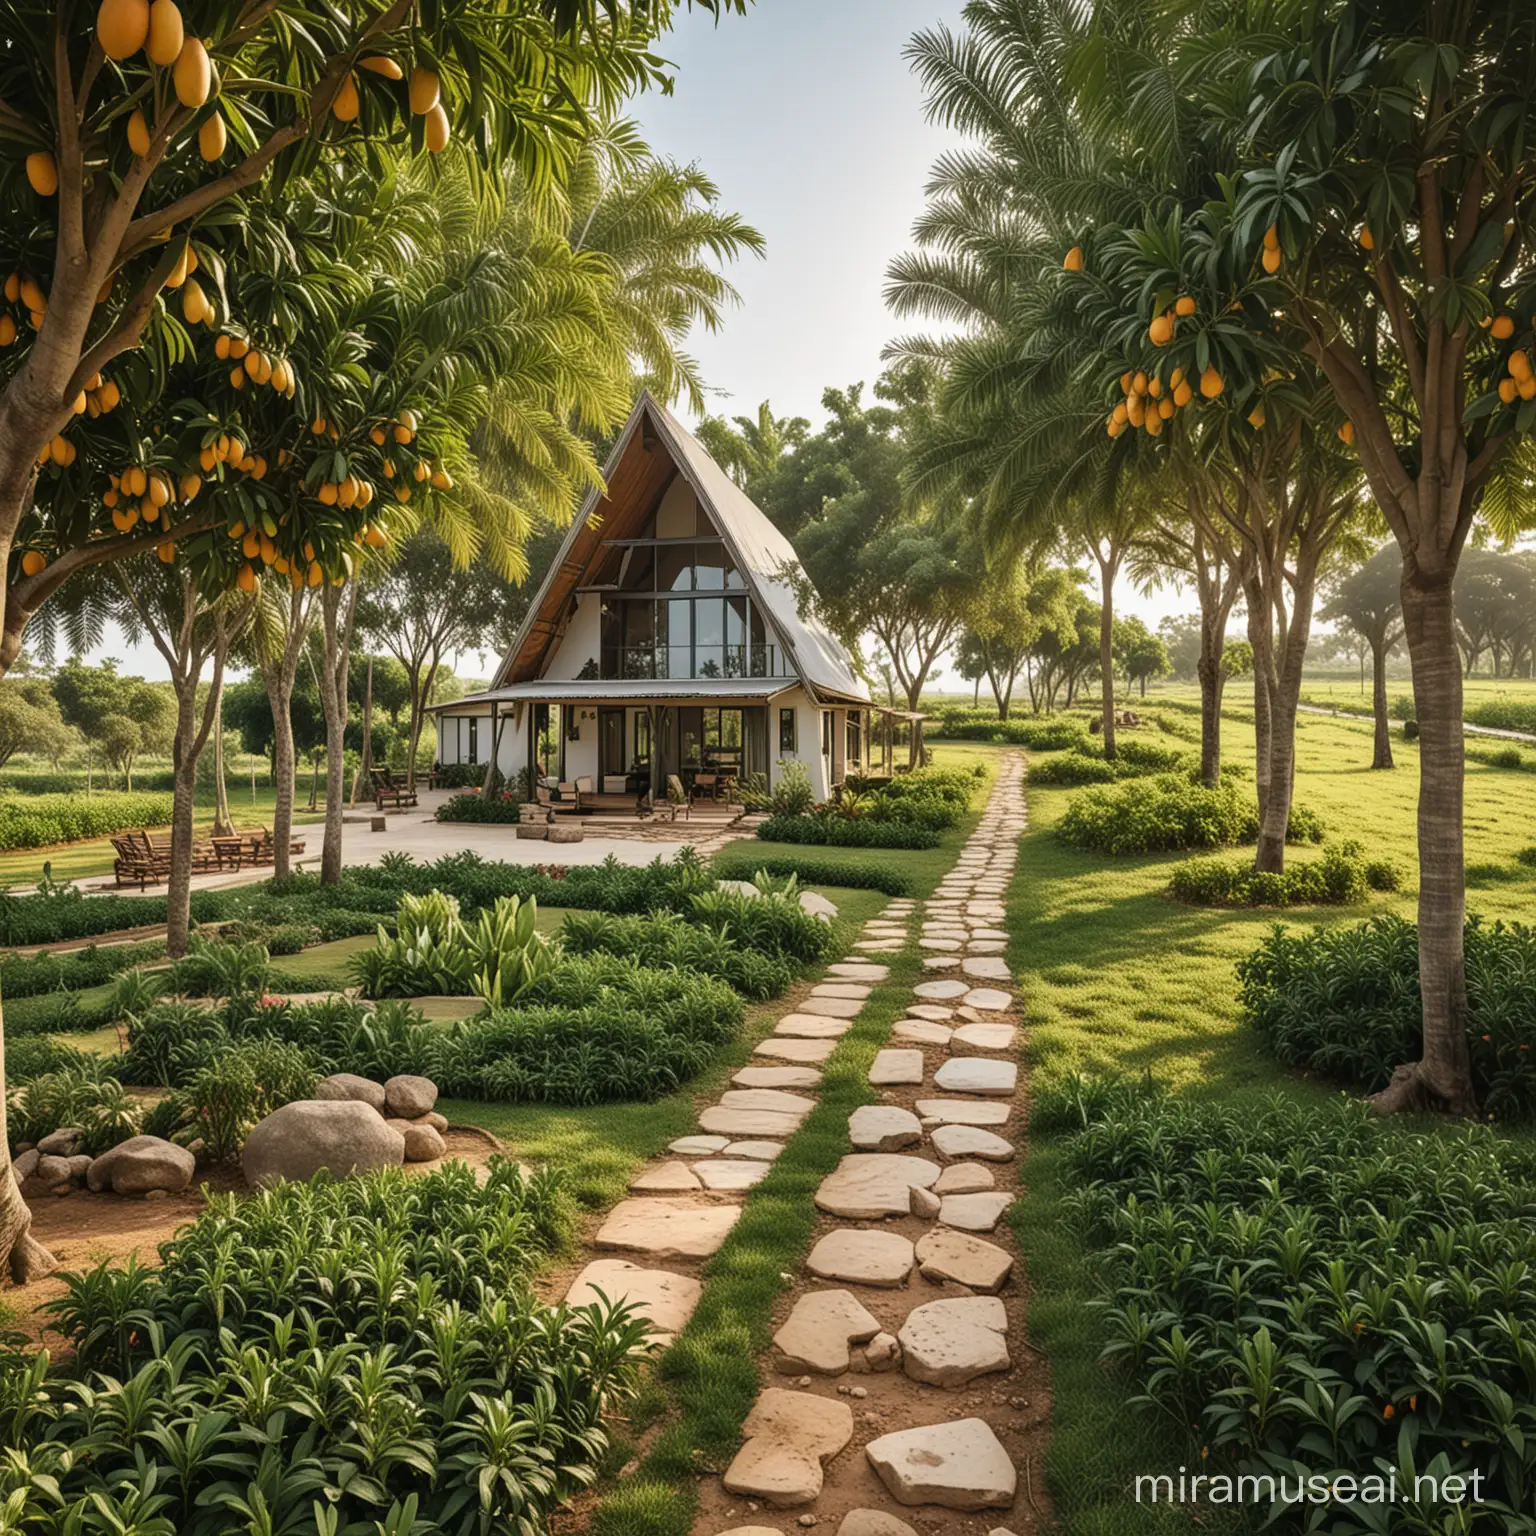 Modern AFrame Farmhouse Surrounded by Mango Trees on Farmland